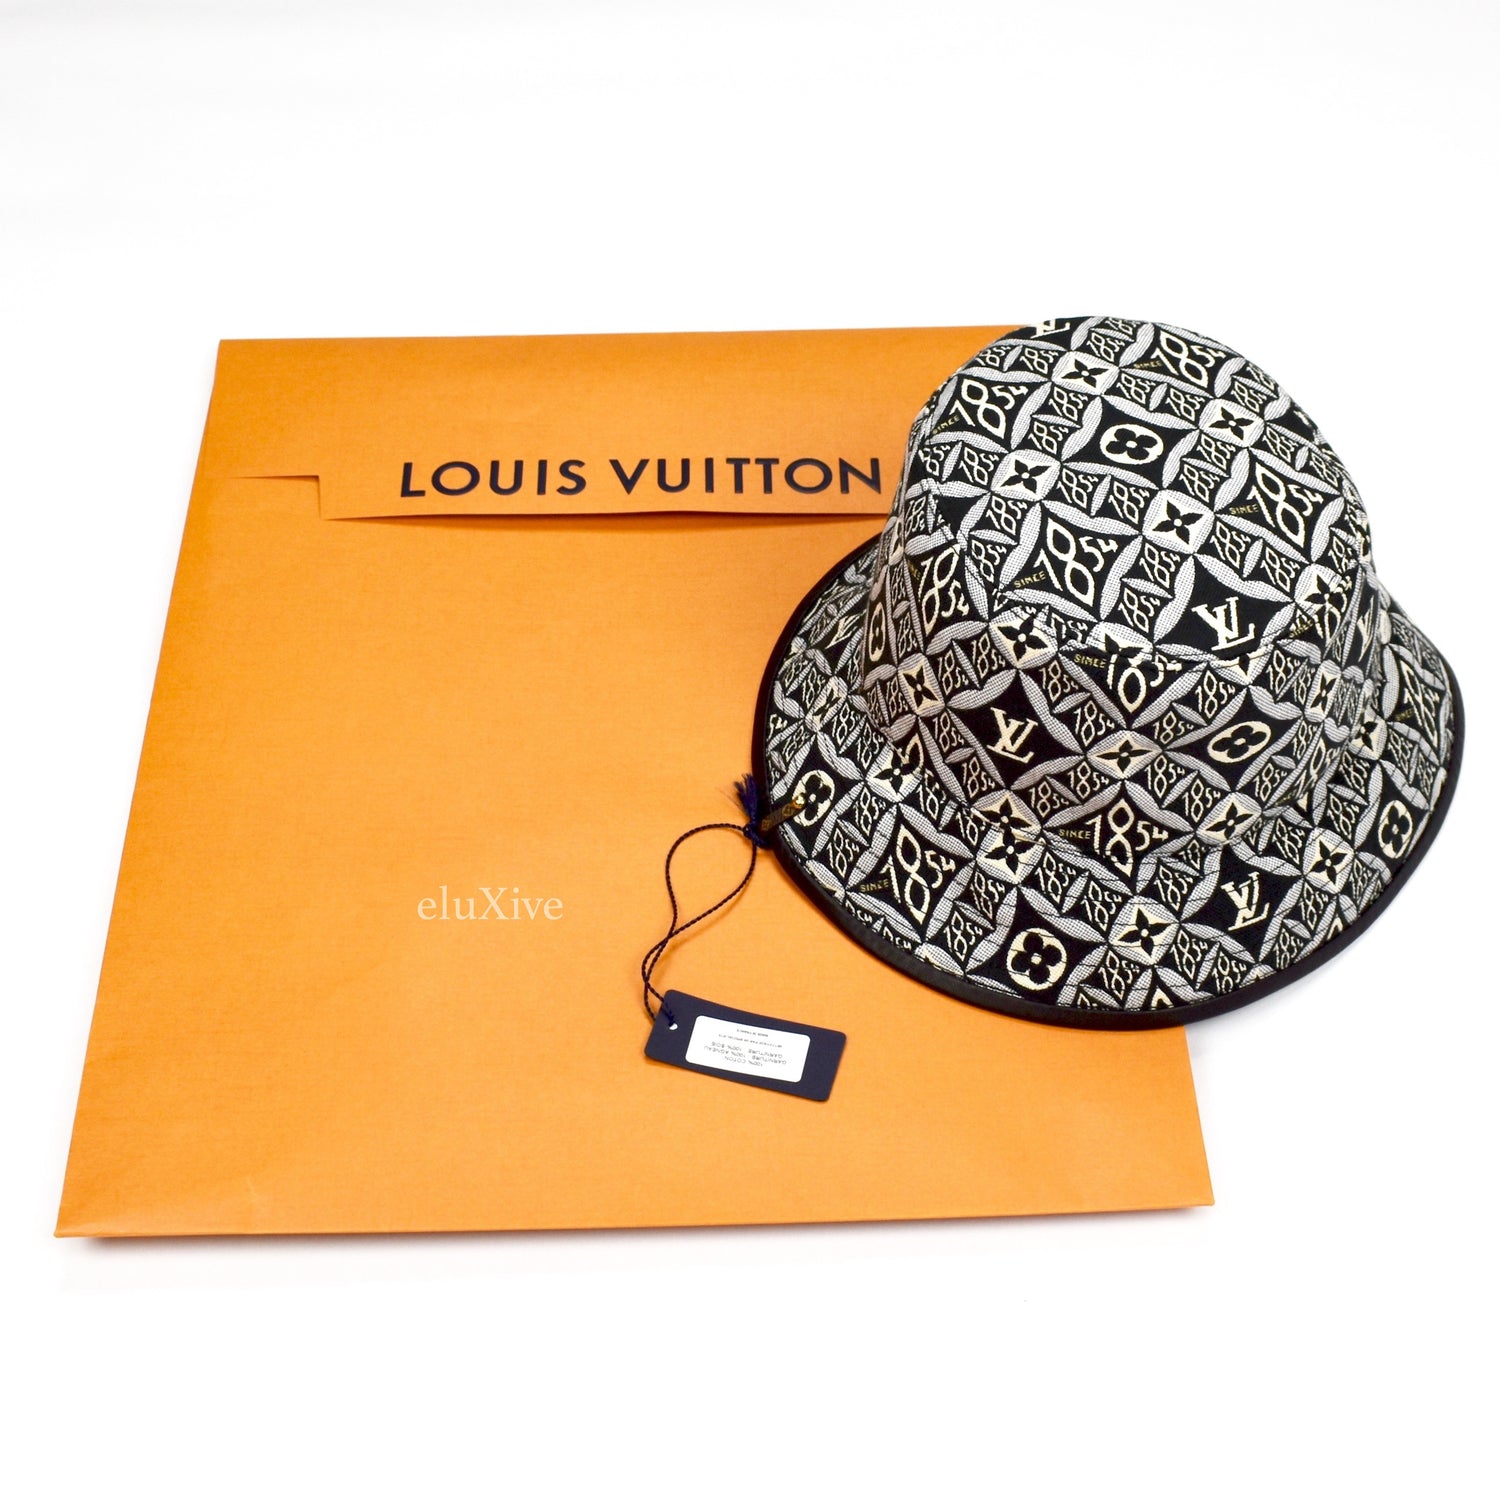 Louis Vuitton Black and White Since 1854 Bucket Hat - Ann's